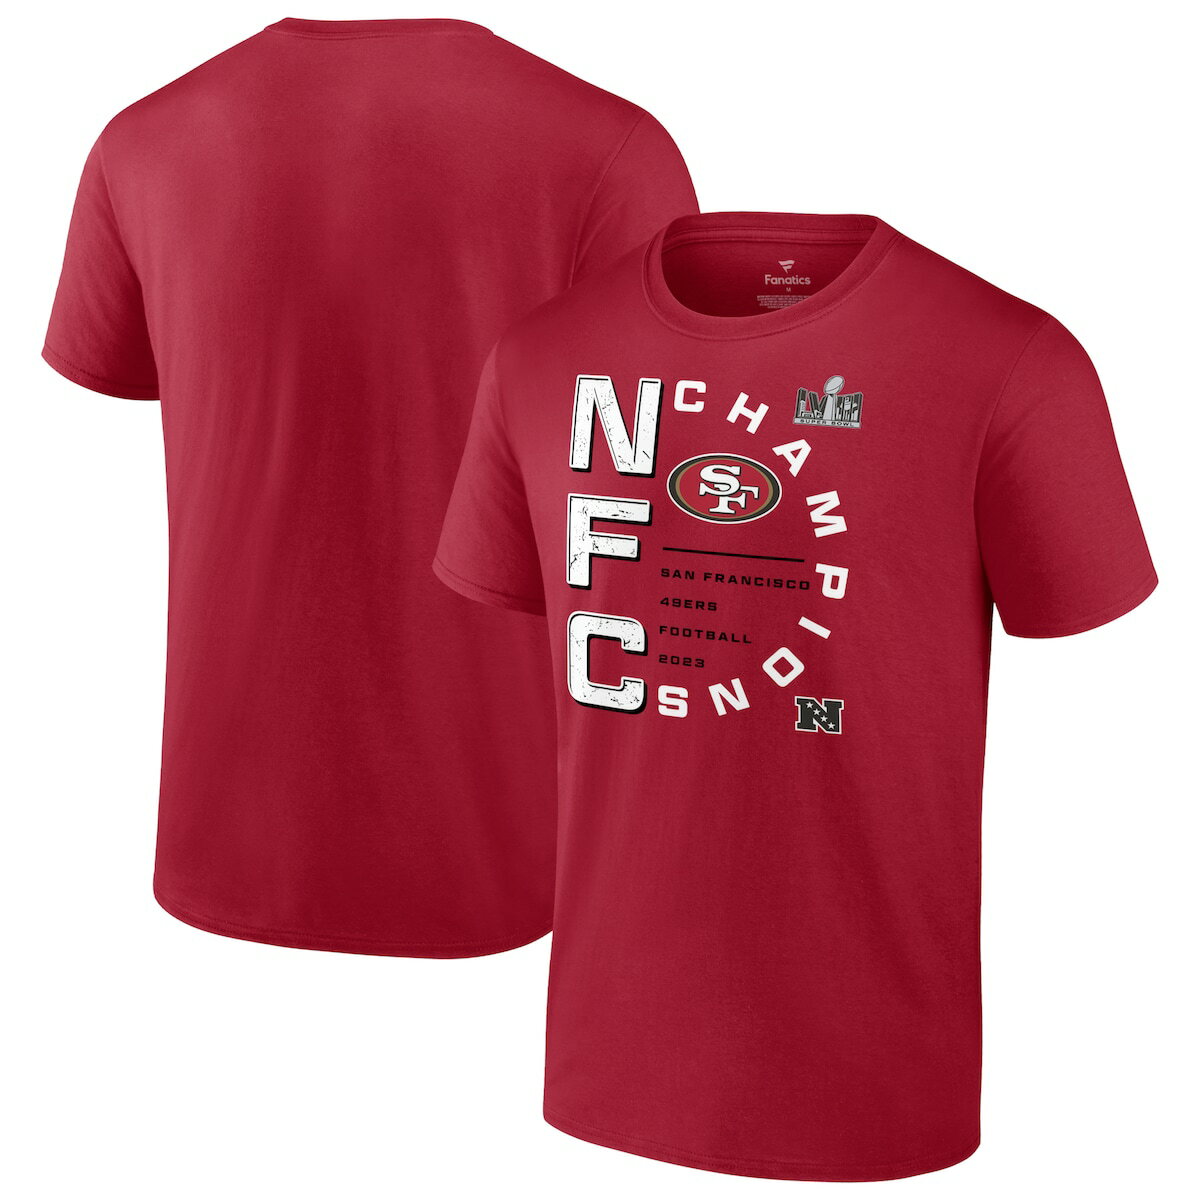 NFL 49ers Tシャツ Fanatics（ファナティクス） メンズ スカーレット (MEN'S NFL 24 RIGHT SIDE DRAW CC)